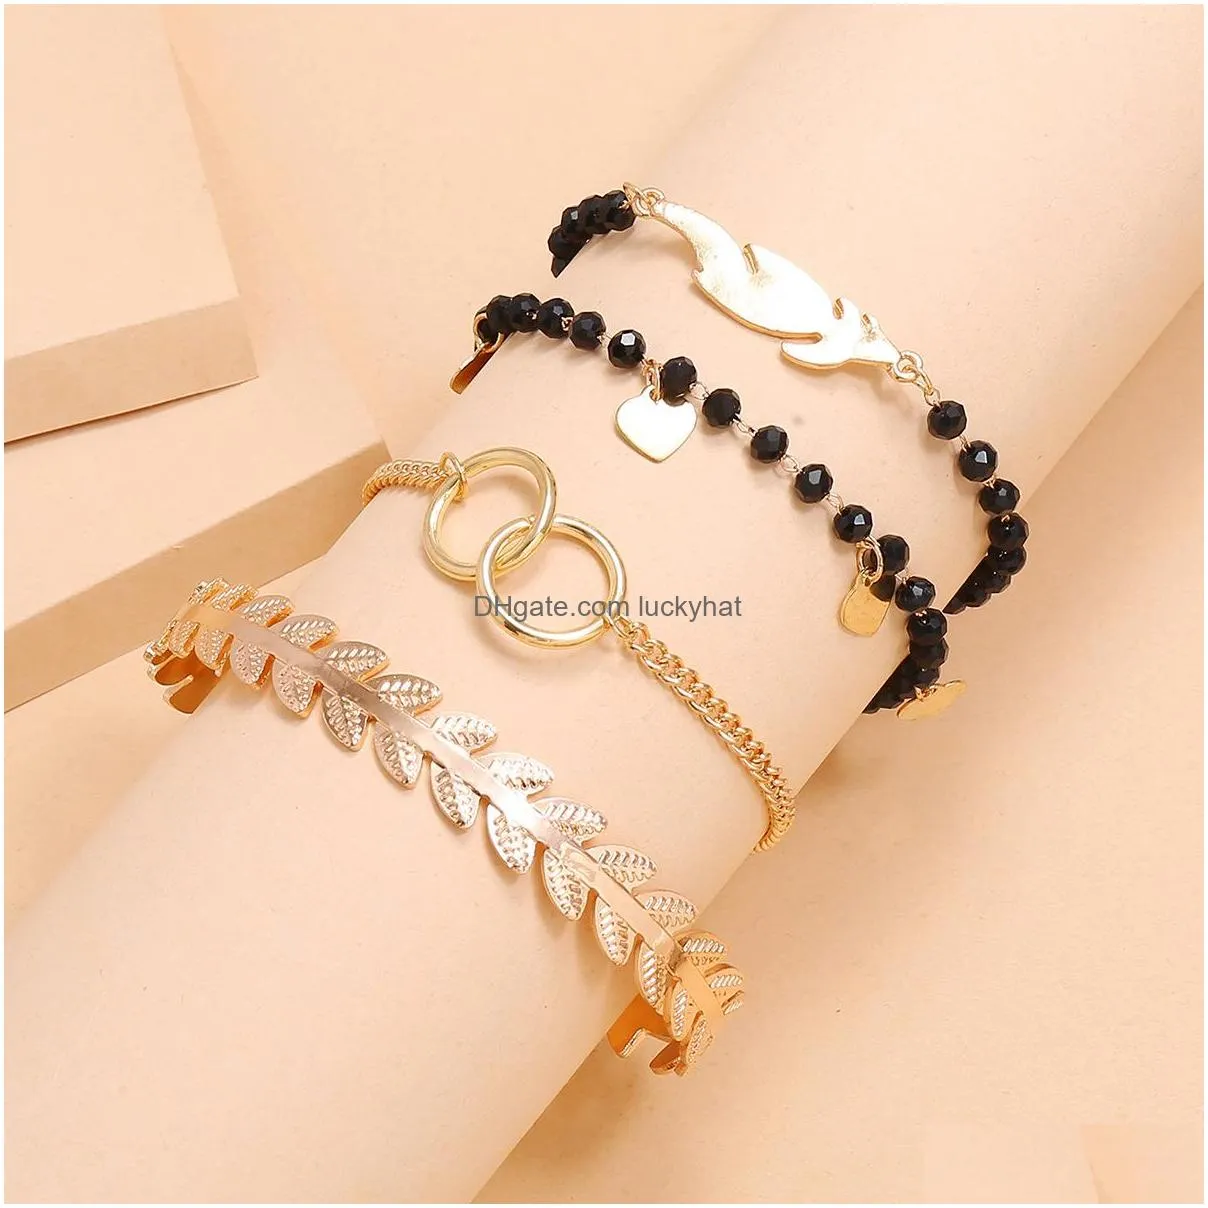 fashion jewelry 4pcs/set bracelet double ring heart pendant beads bangle bracelets set